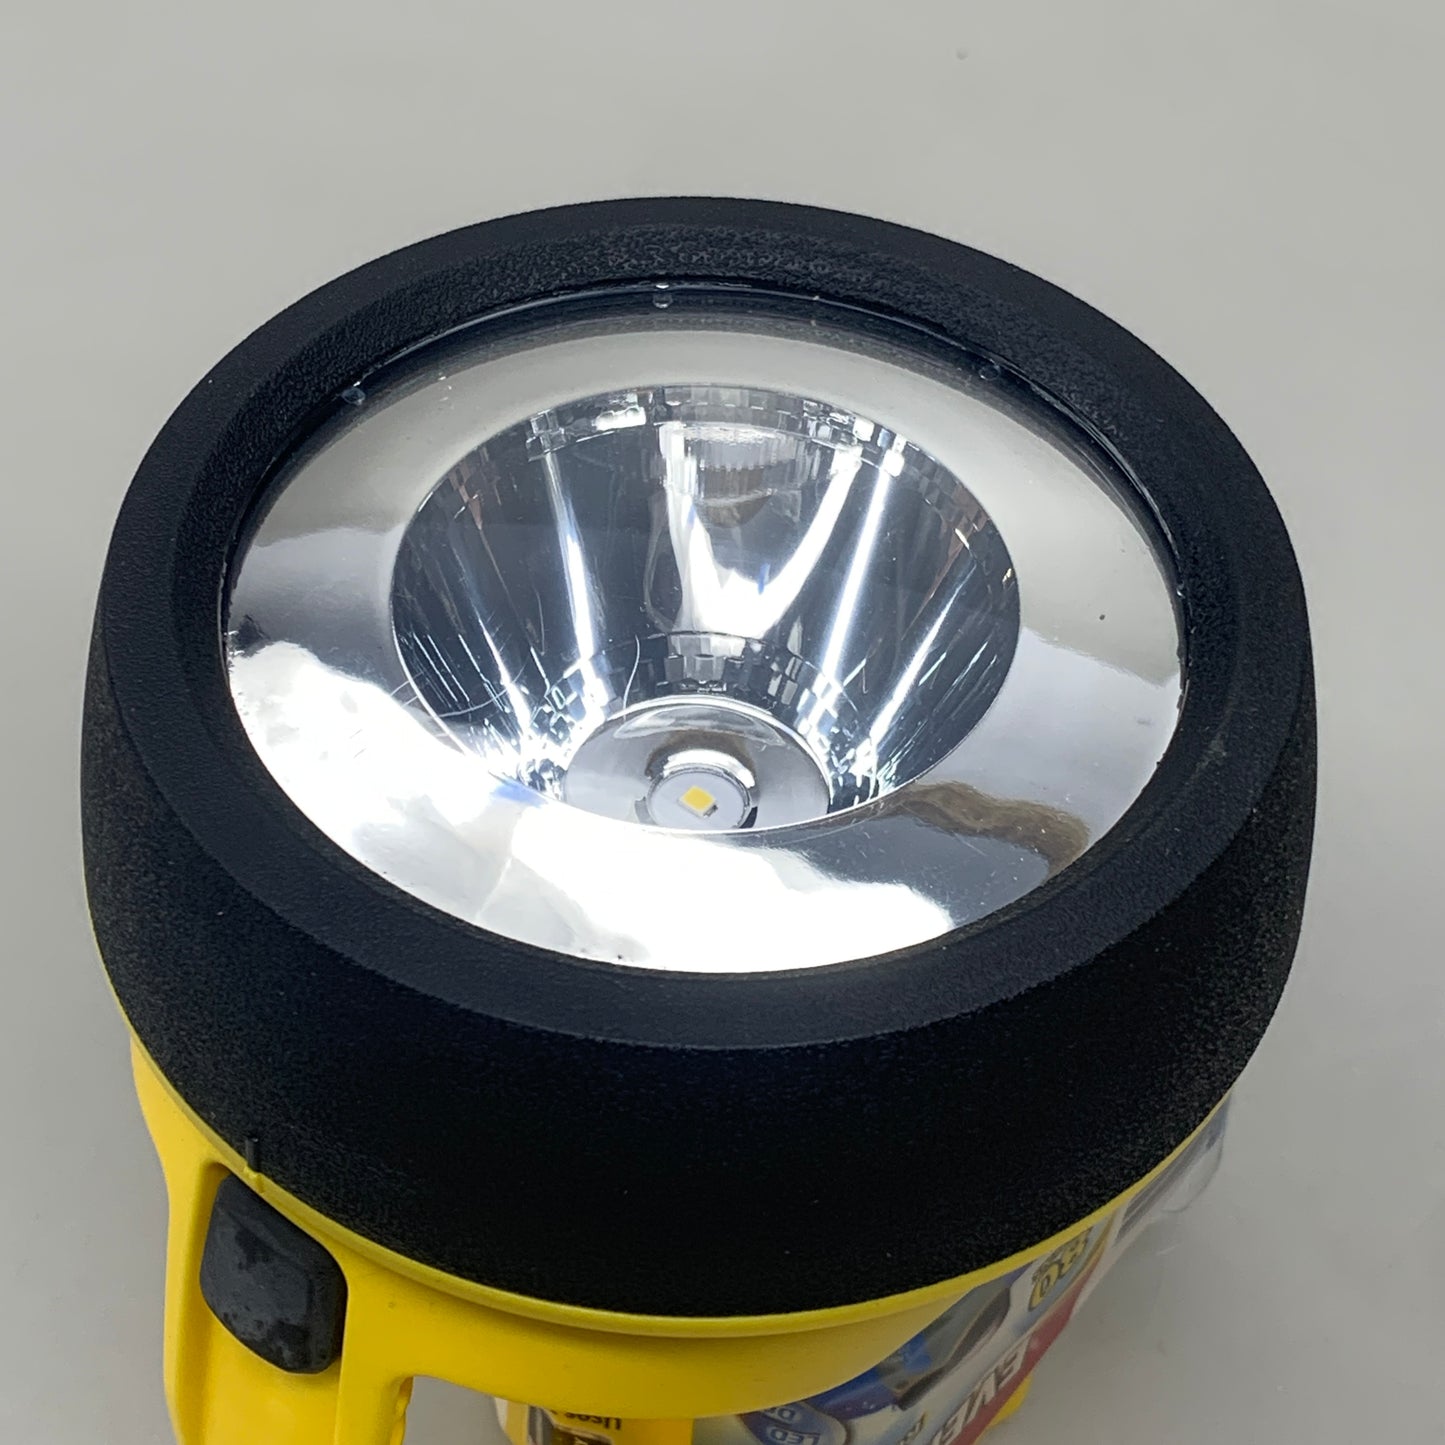 ENERGIZER (2 PACK) Eveready Floating Lantern Carbon Zinc Battery Yellow EVGPLN45H